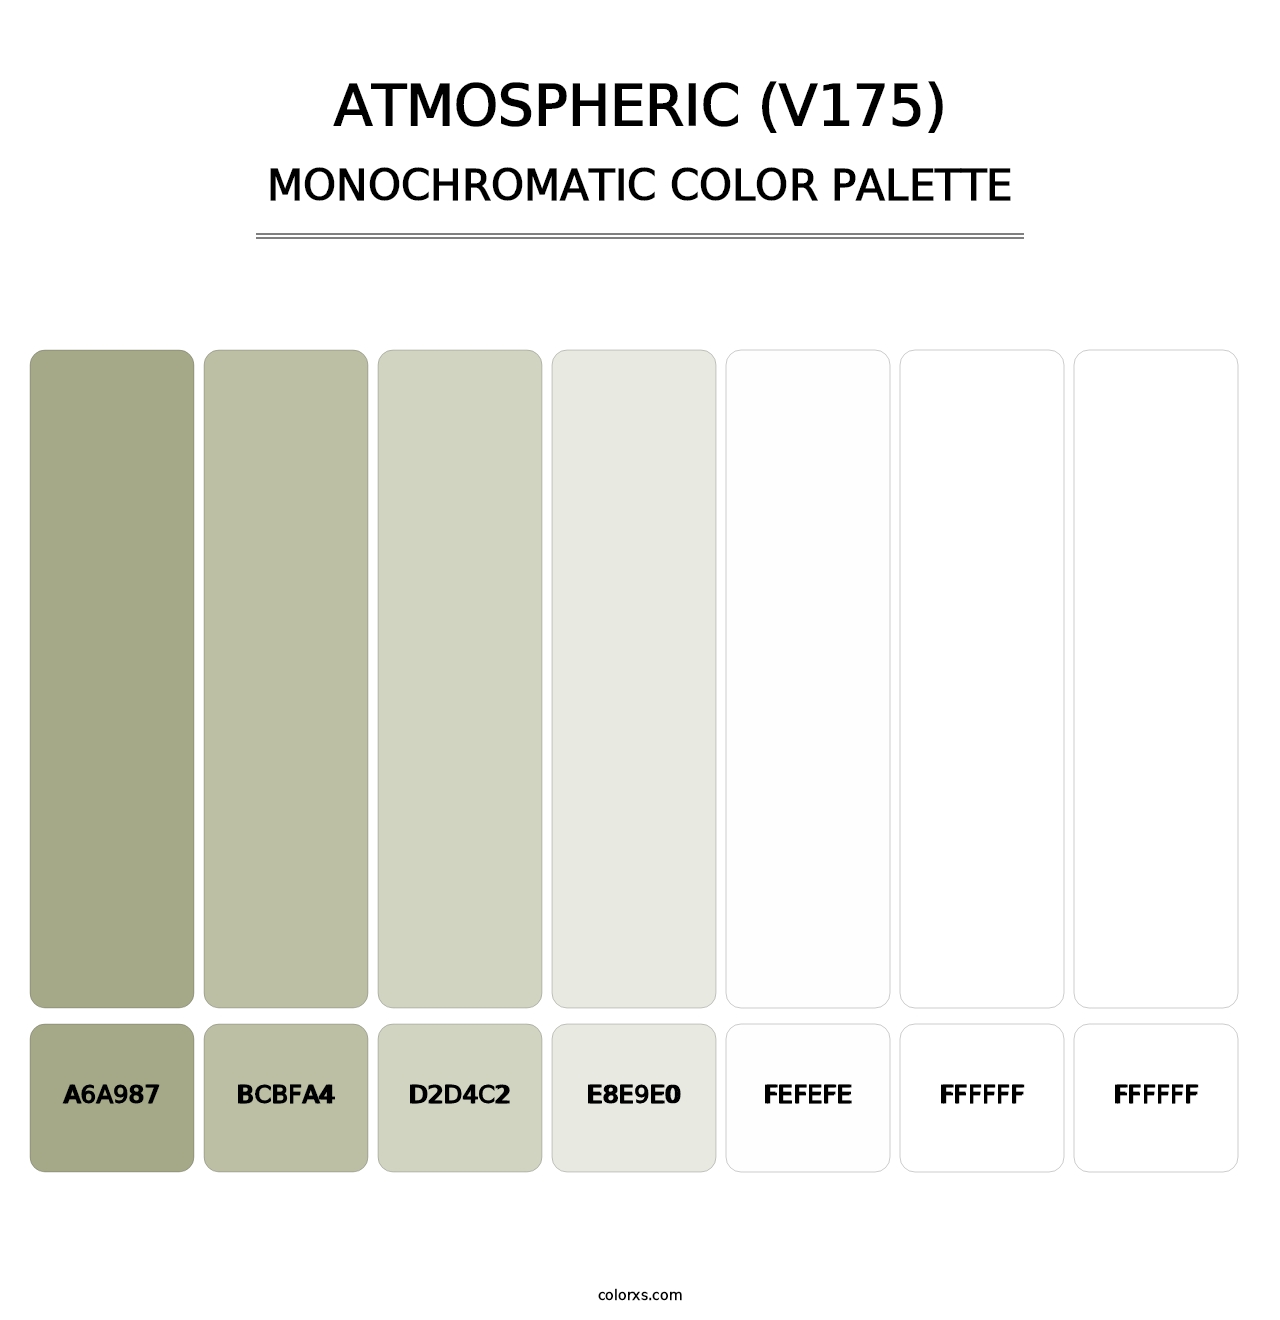 Atmospheric (V175) - Monochromatic Color Palette